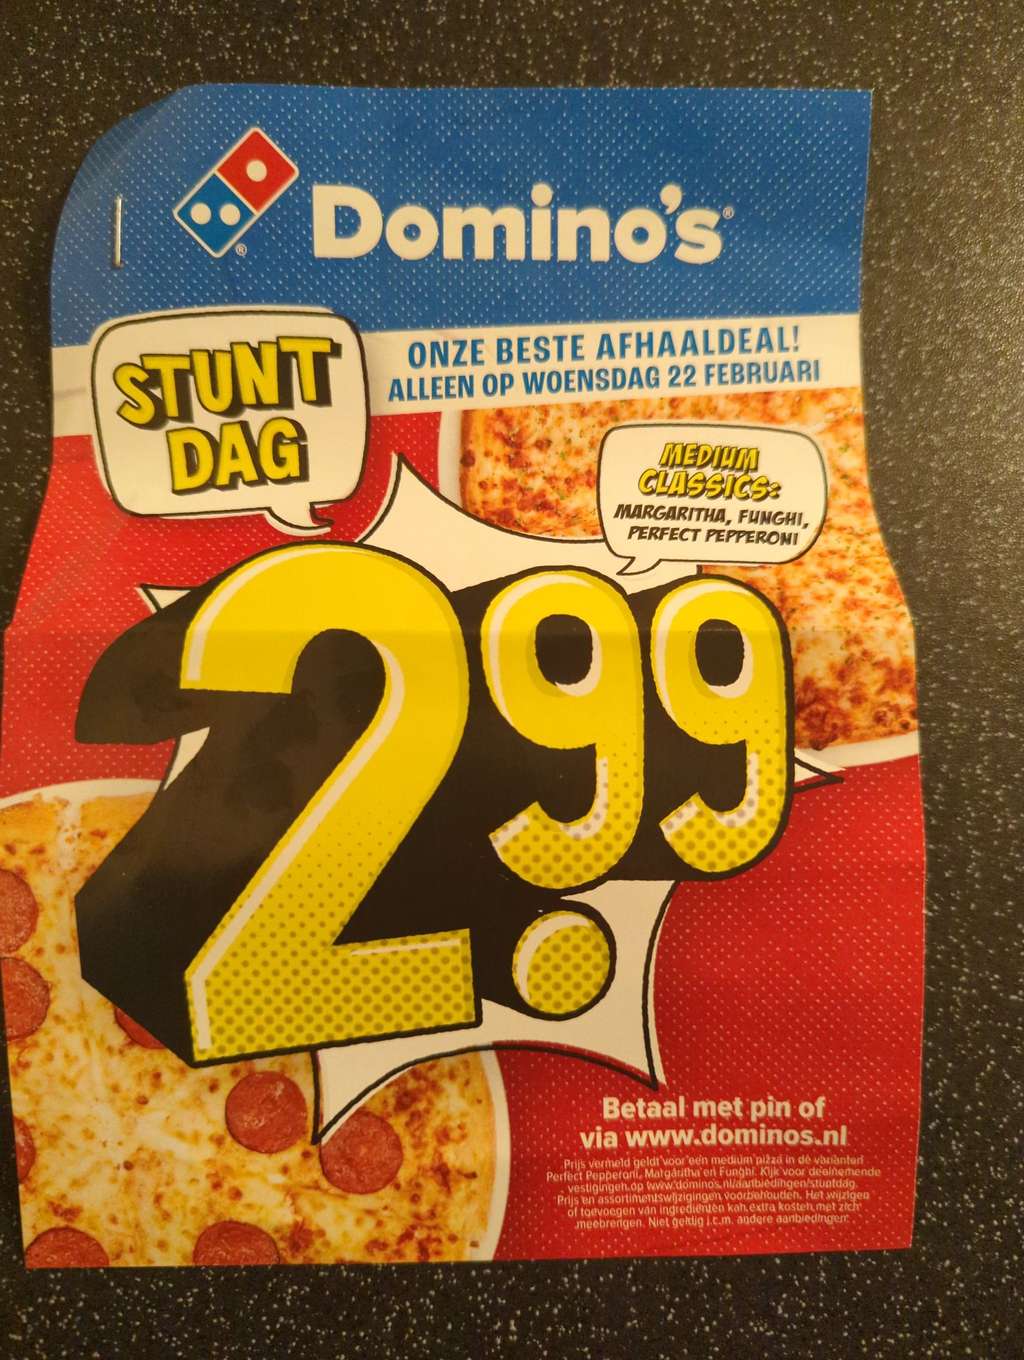 Ansichtkaart kaas Opeenvolgend Lokaal) Domino's stuntdag: €2.99 voor 1 pizza (Afhaal) - Pepper.com